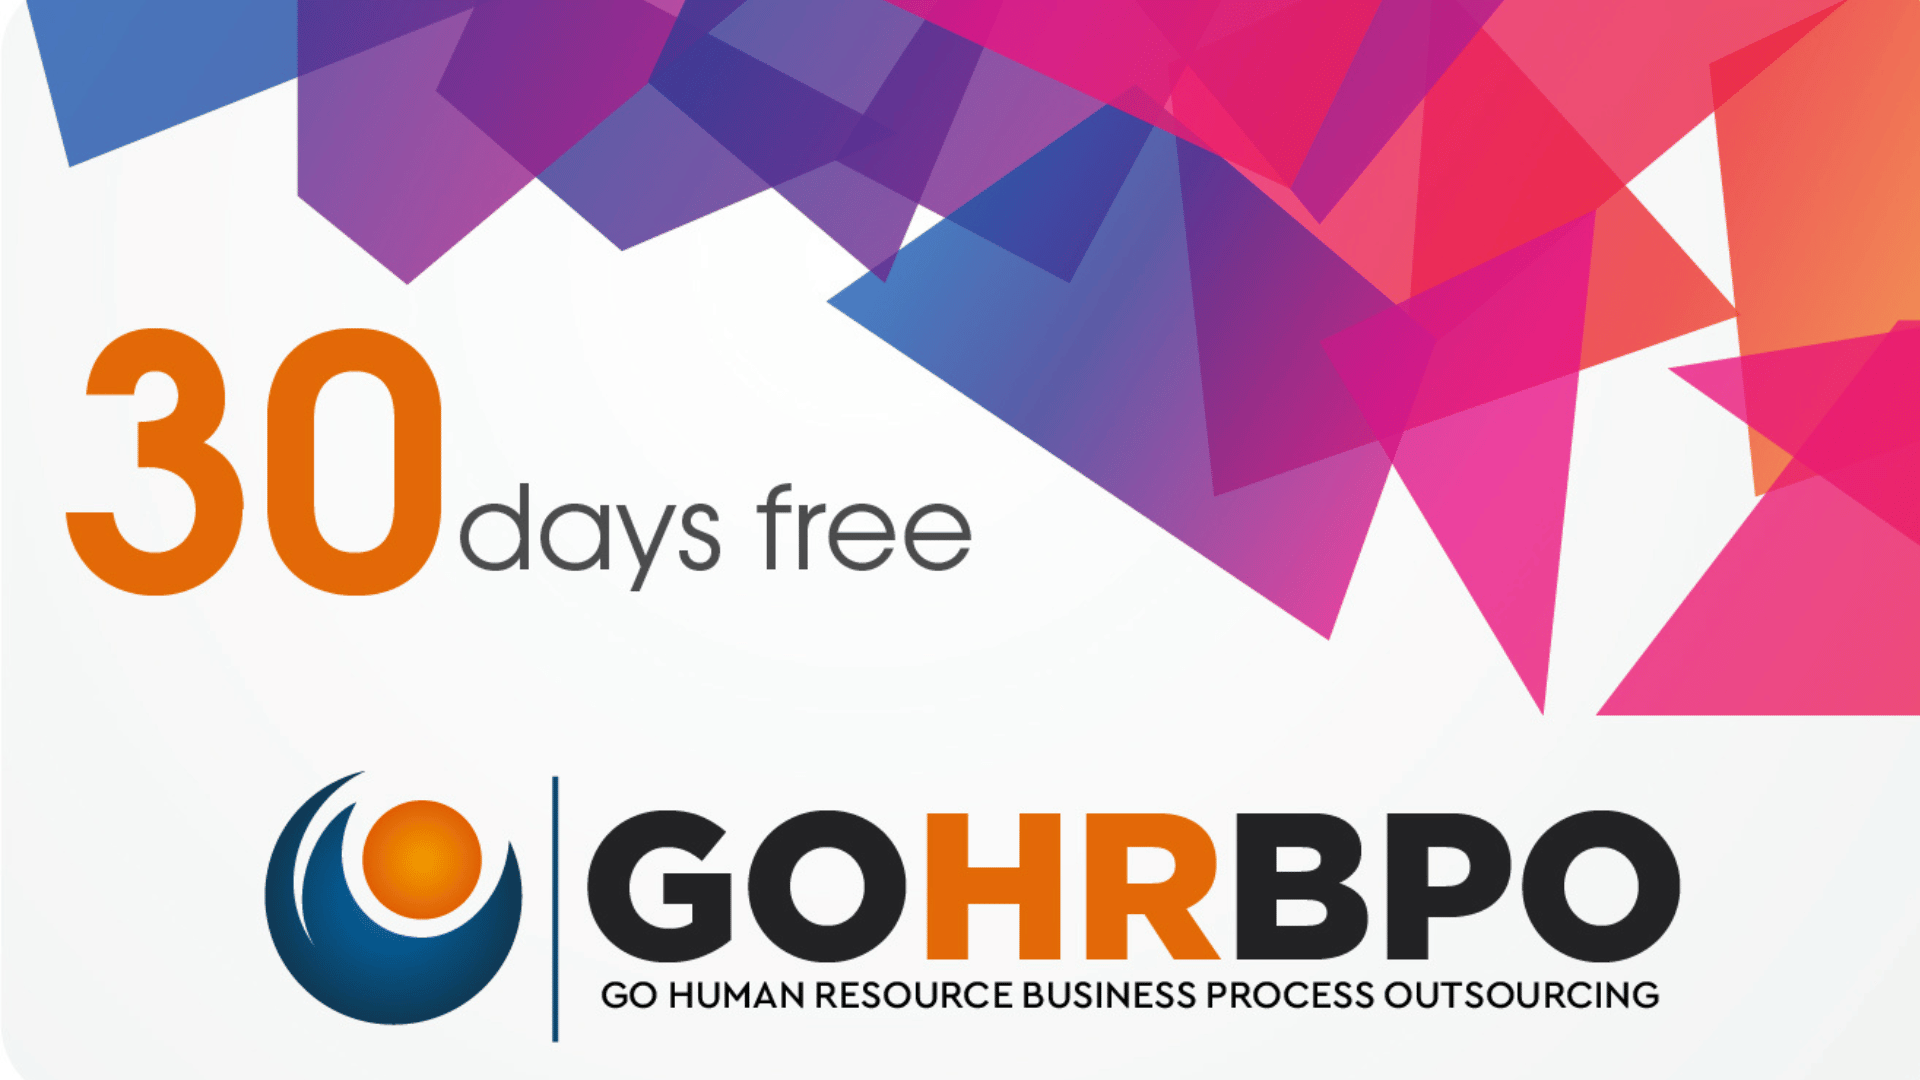 The iamge displays GOHRBPO logo and mentions 30 days free GOHRBPO payroll.